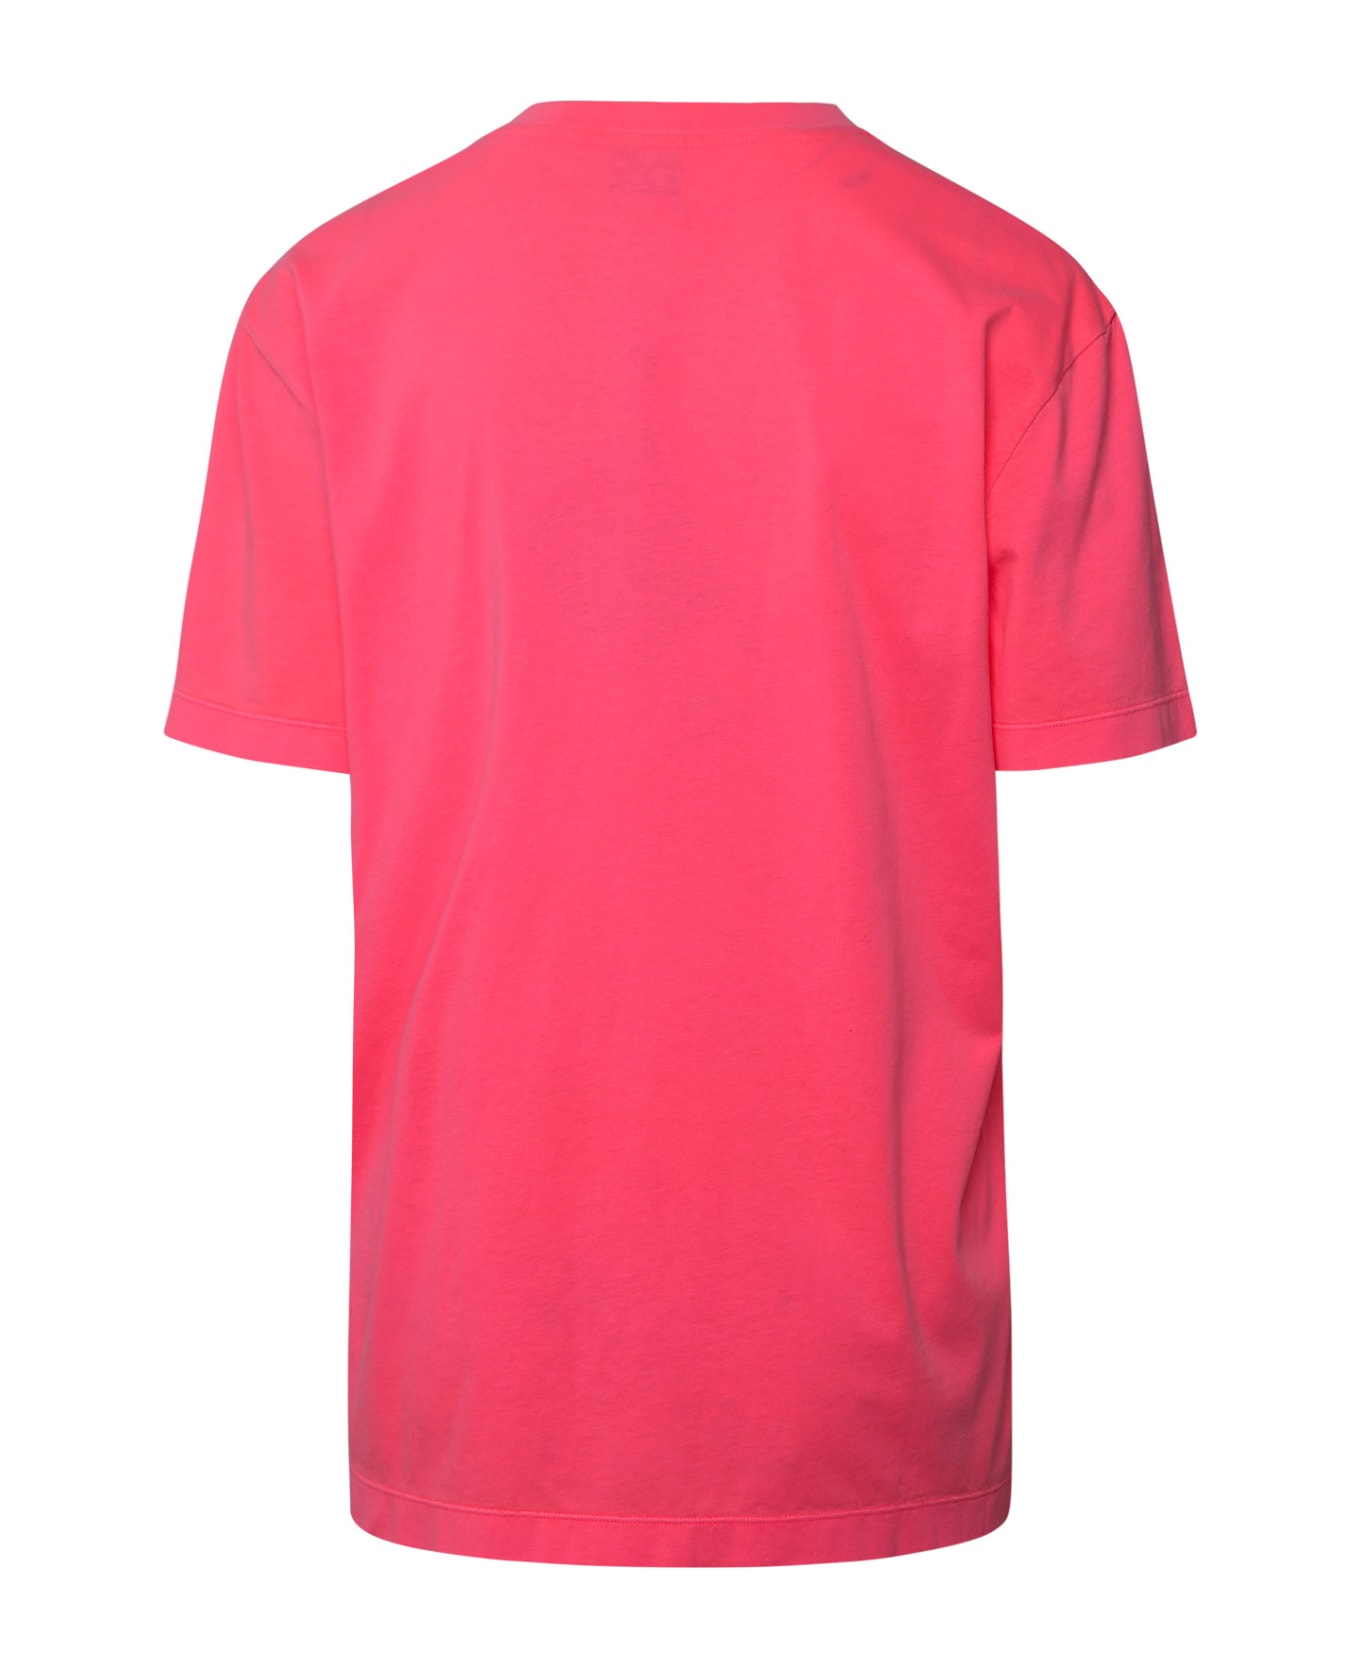 Patou Essential Logo Neon Pink Cotton T-shirt - Pink